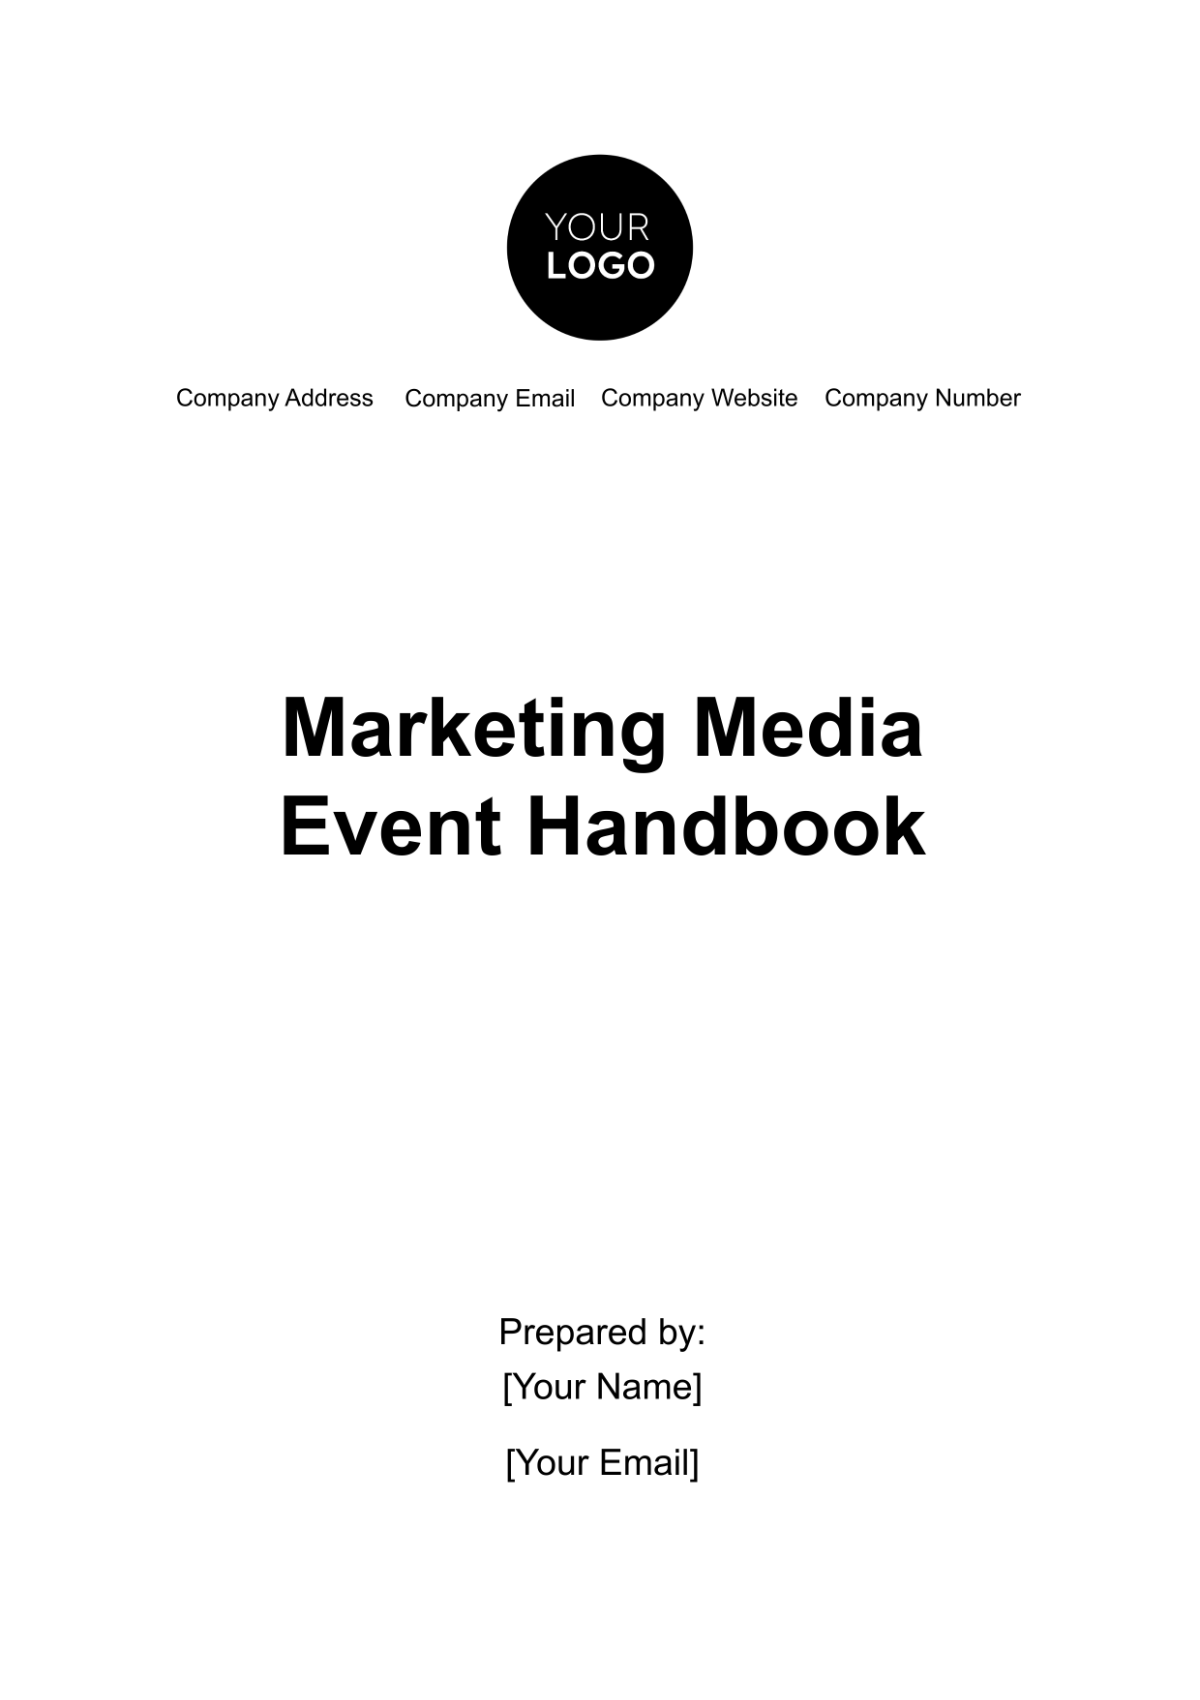 Marketing Media Event Handbook Template